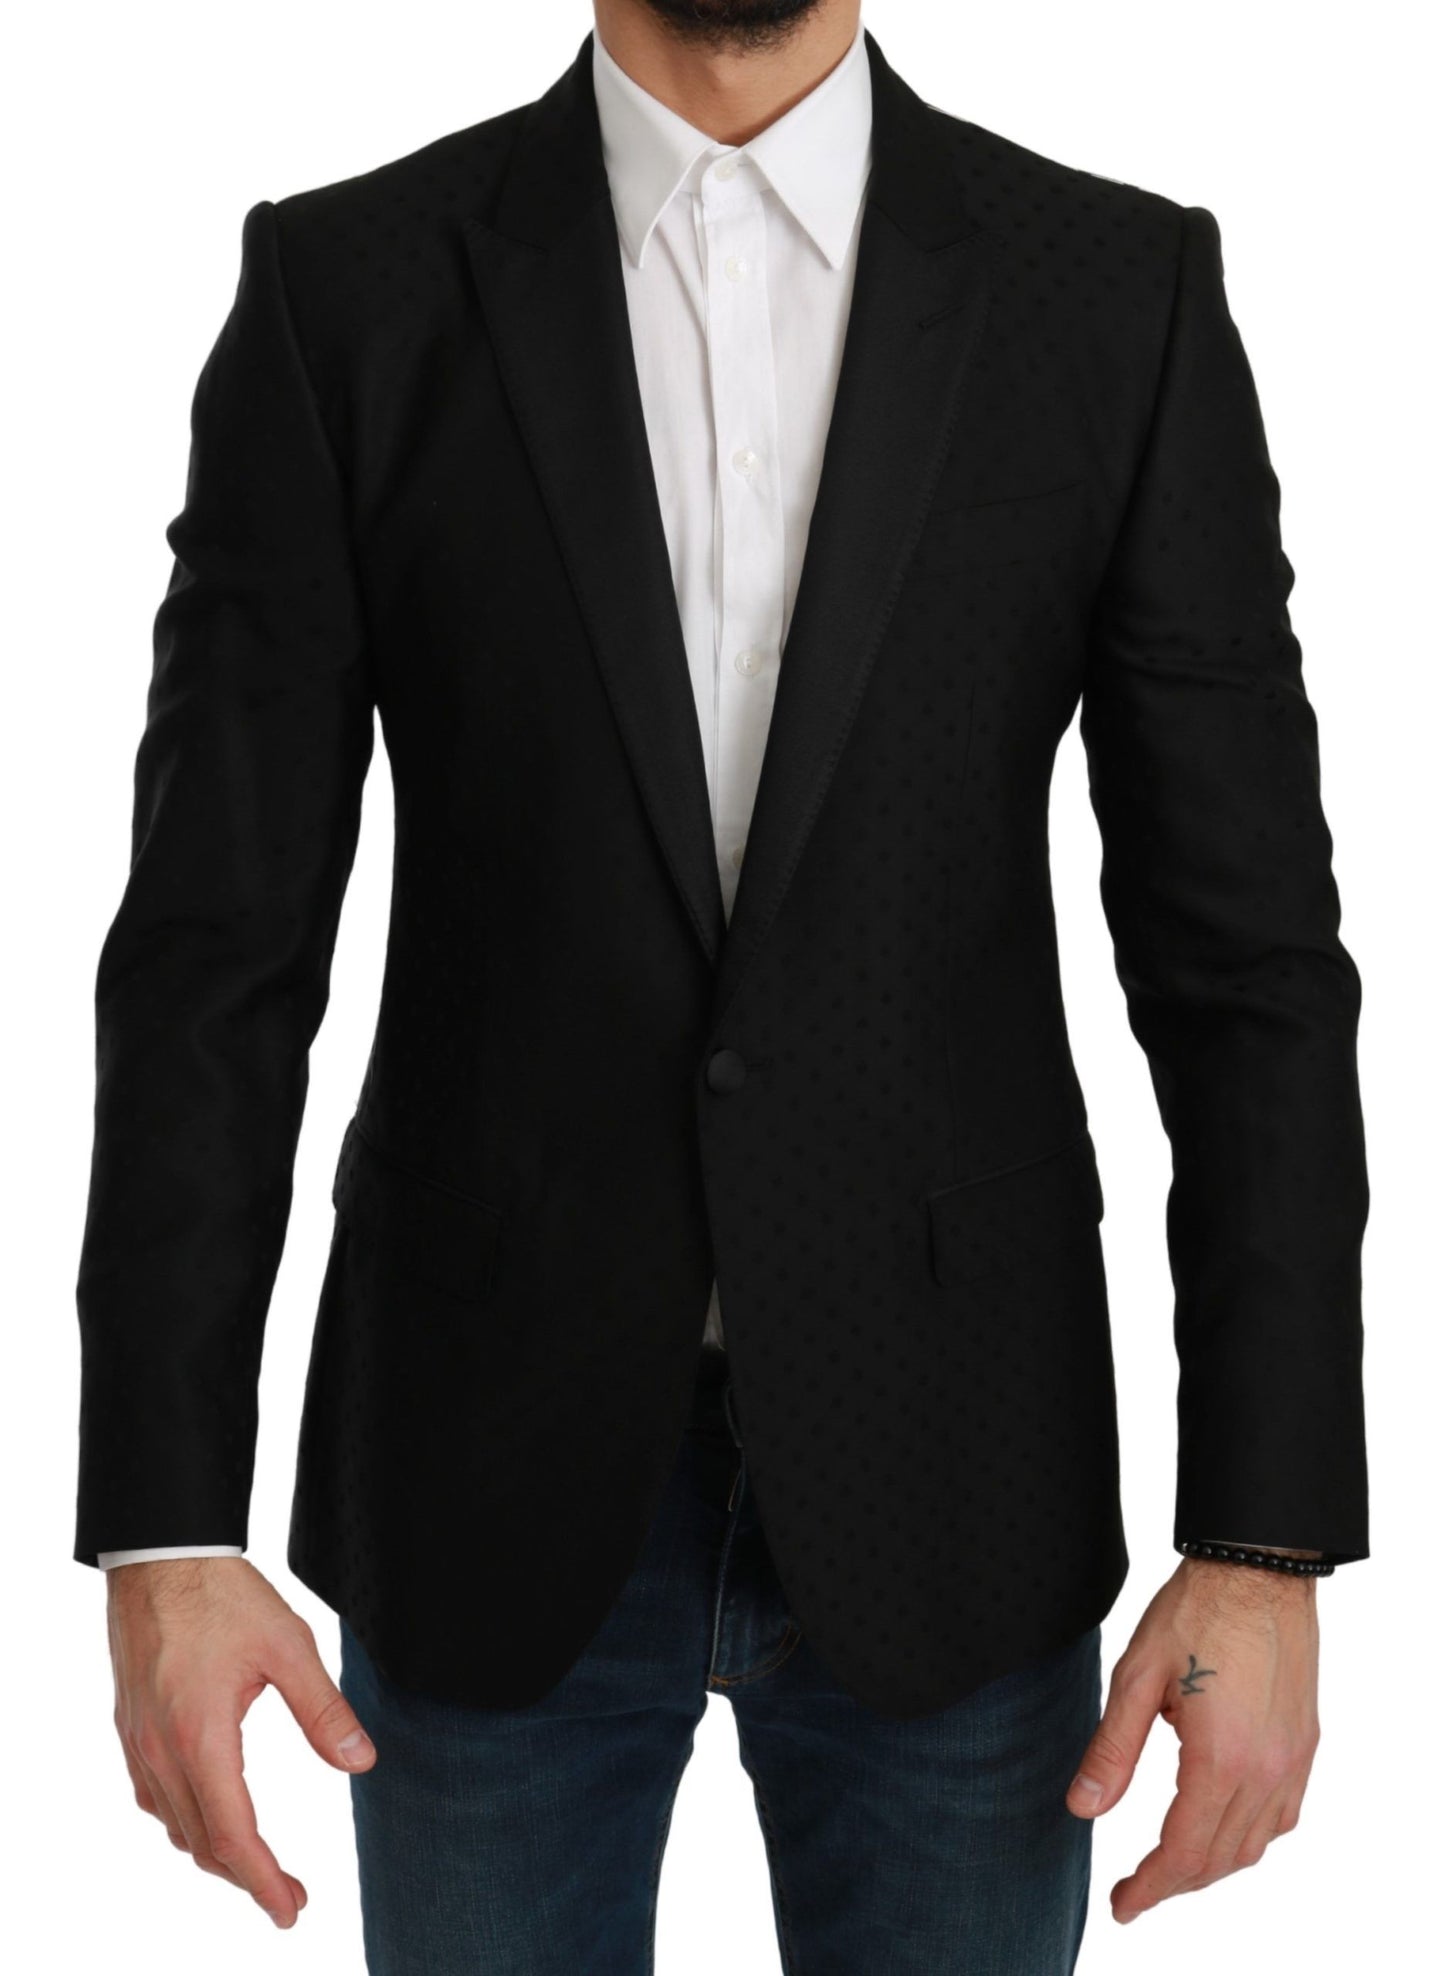 Dolce & Gabbana Black Slim Fit Coat Jacket MARTINI Blazer